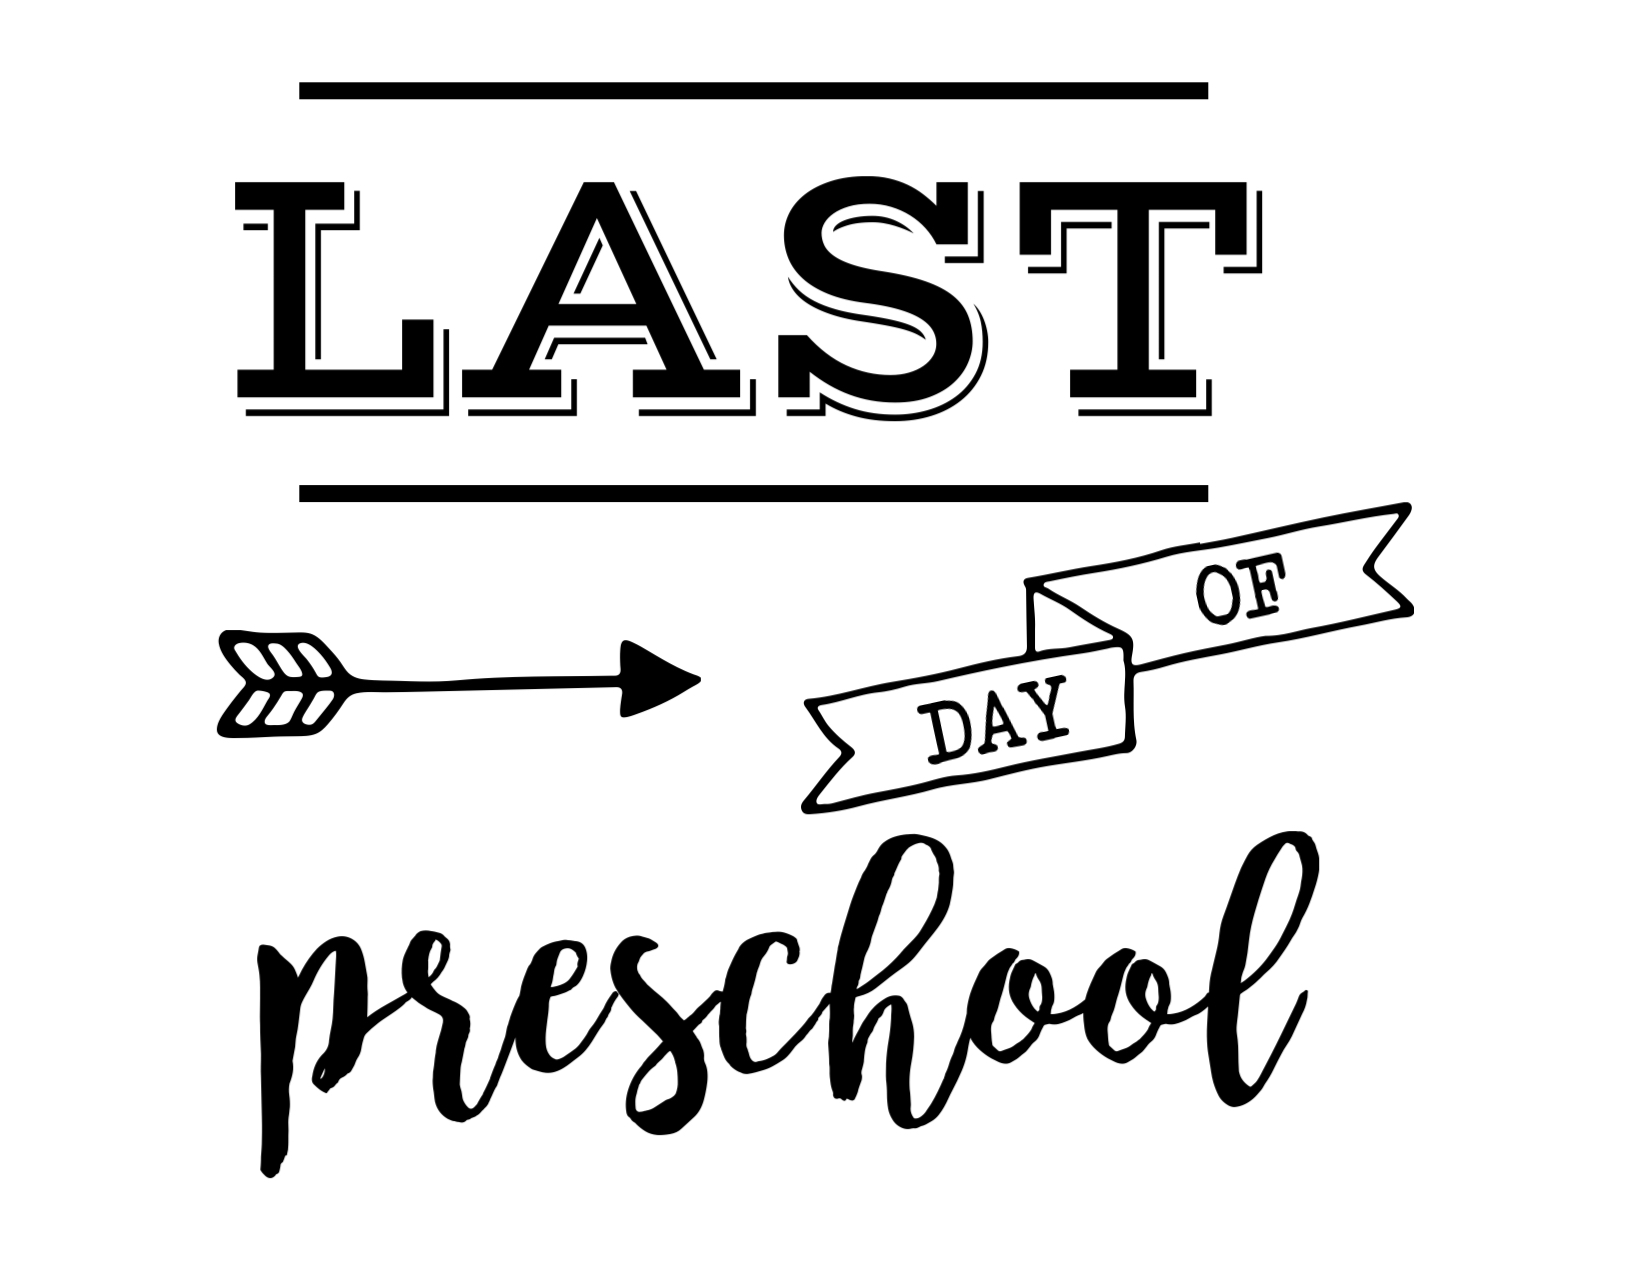 preschool-printable-sign-last-day-of-preschool-2018-last-day-of-pre